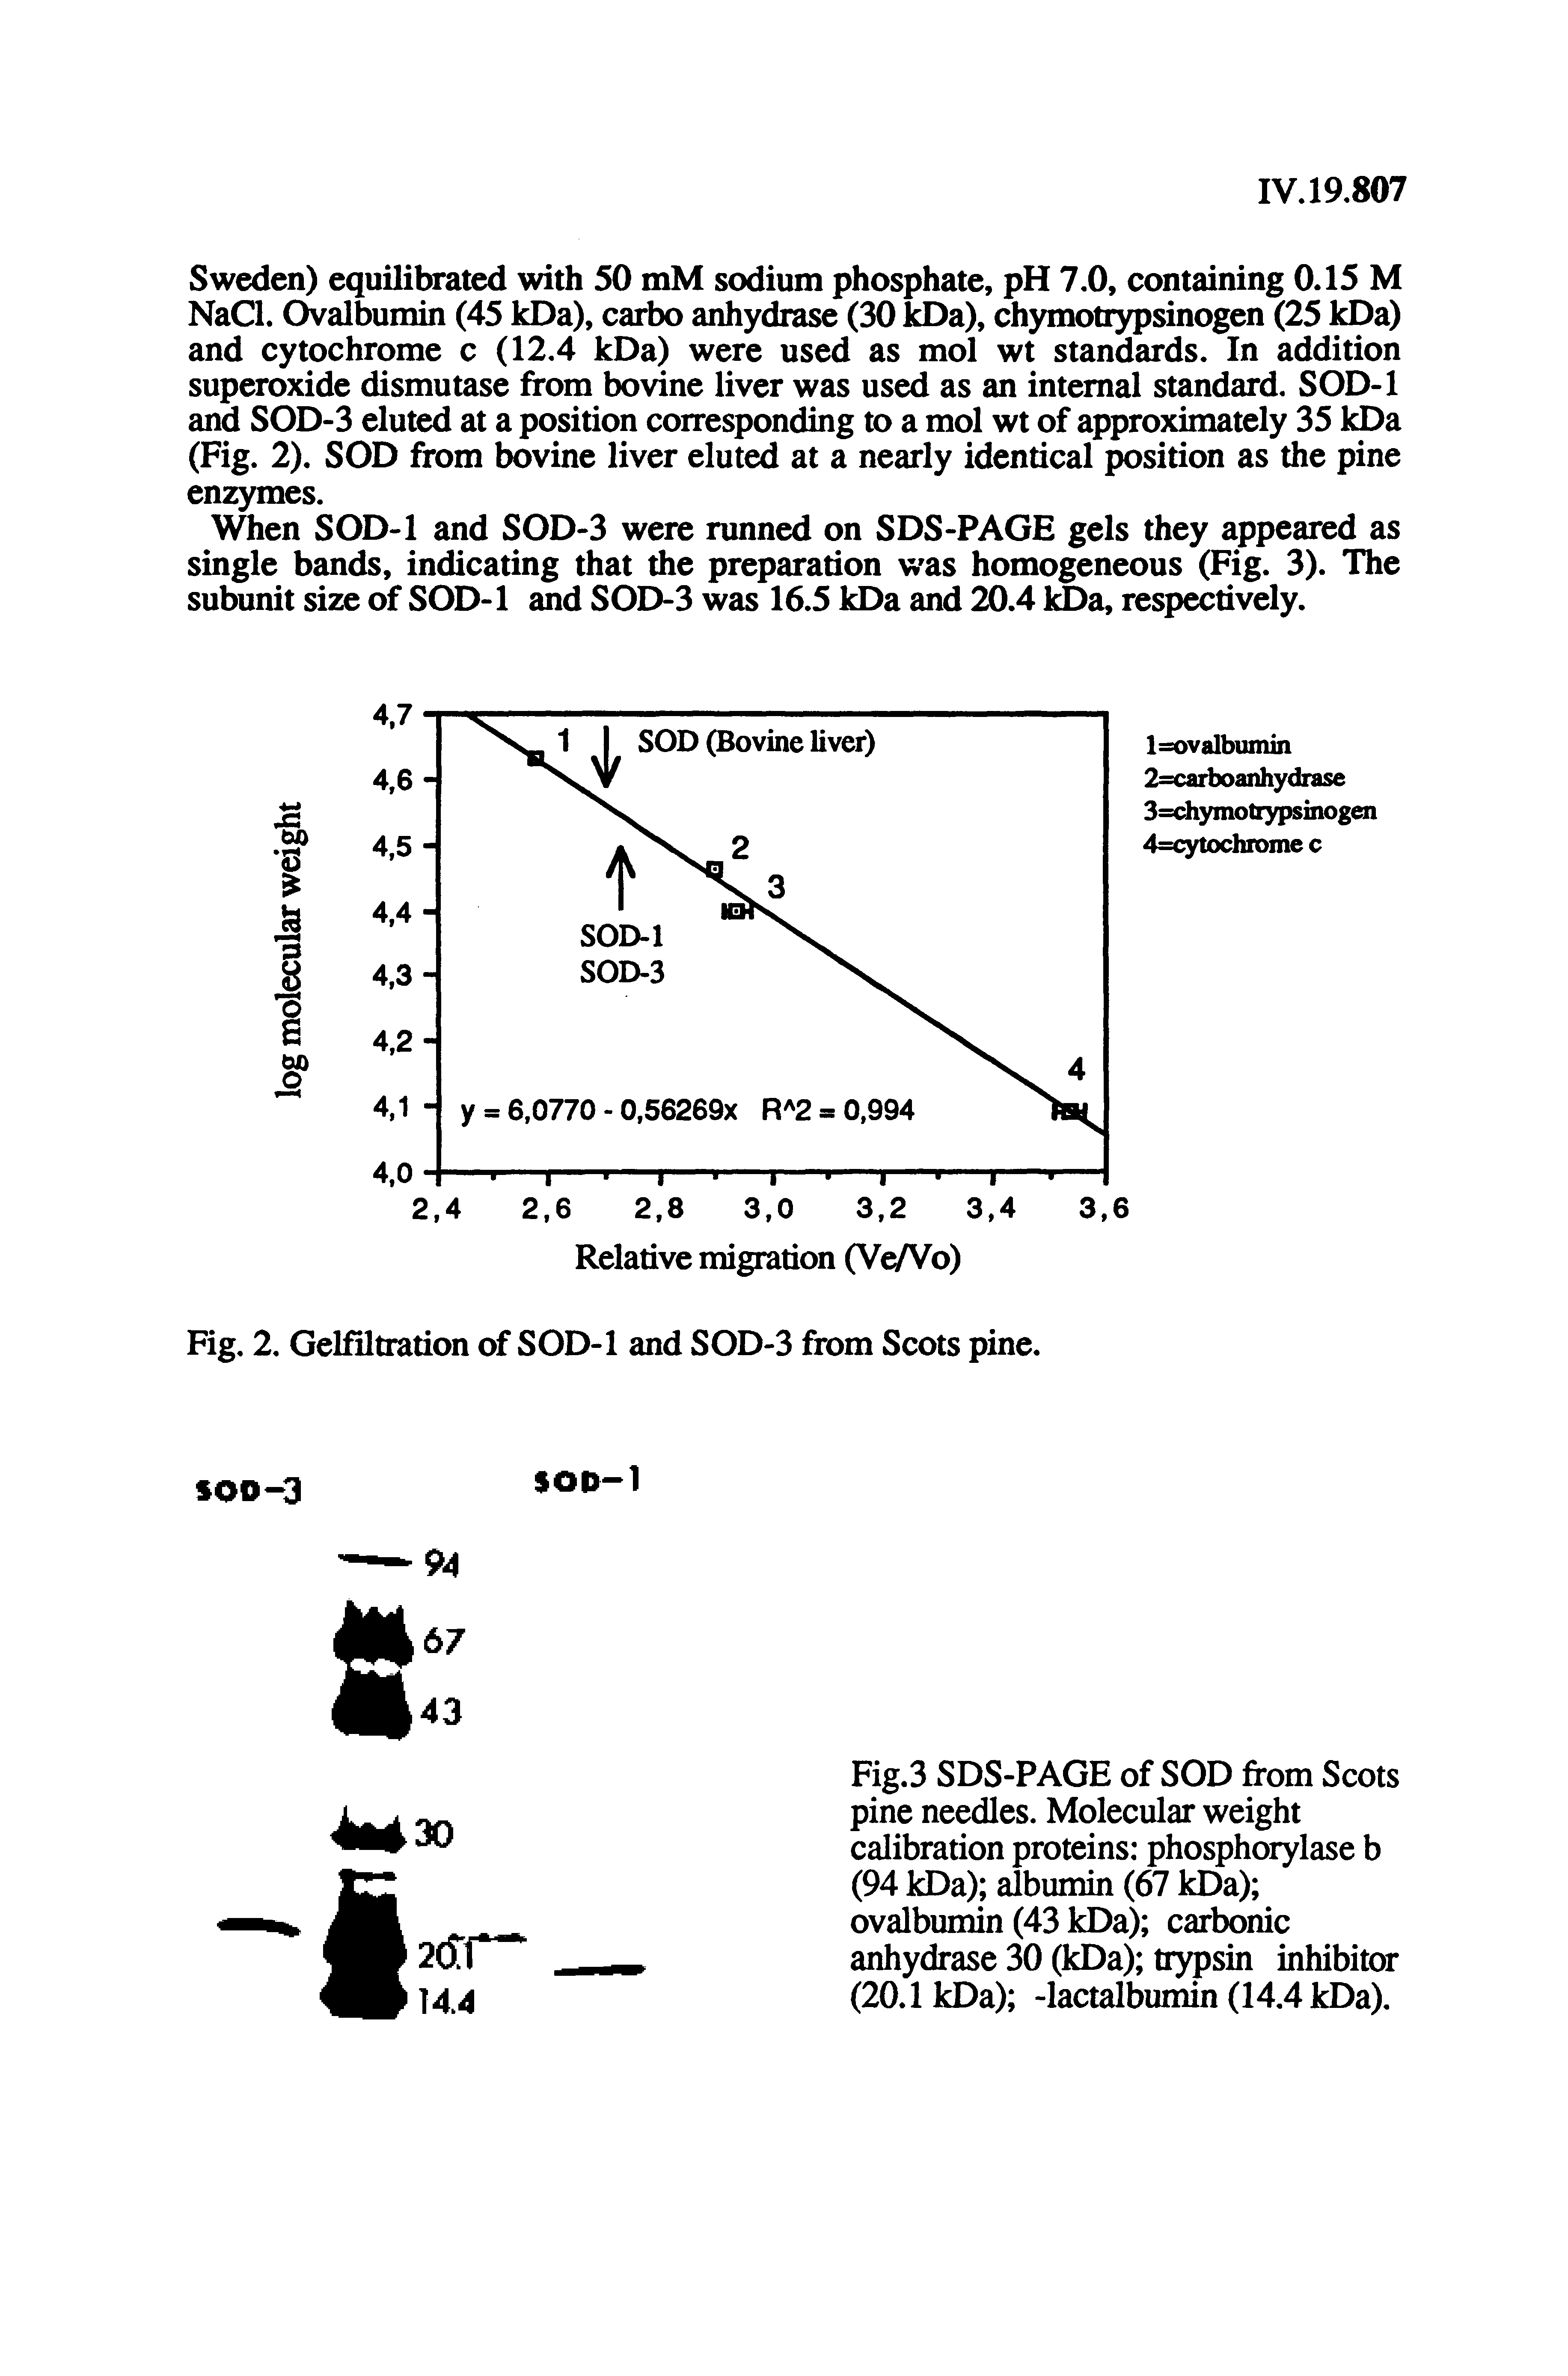 Fig.3 SDS-PAGE of SOD from Scots pine needles. Molecular weight calibration proteins phosphorylase b (94 kDa) albumin (67 kDa) ovalbumin (43 kDa) carbonic anhydrase 30 (kDa) trypsin inhibitor (20.1 kDa) -lactalbumin (14.4 kDa).